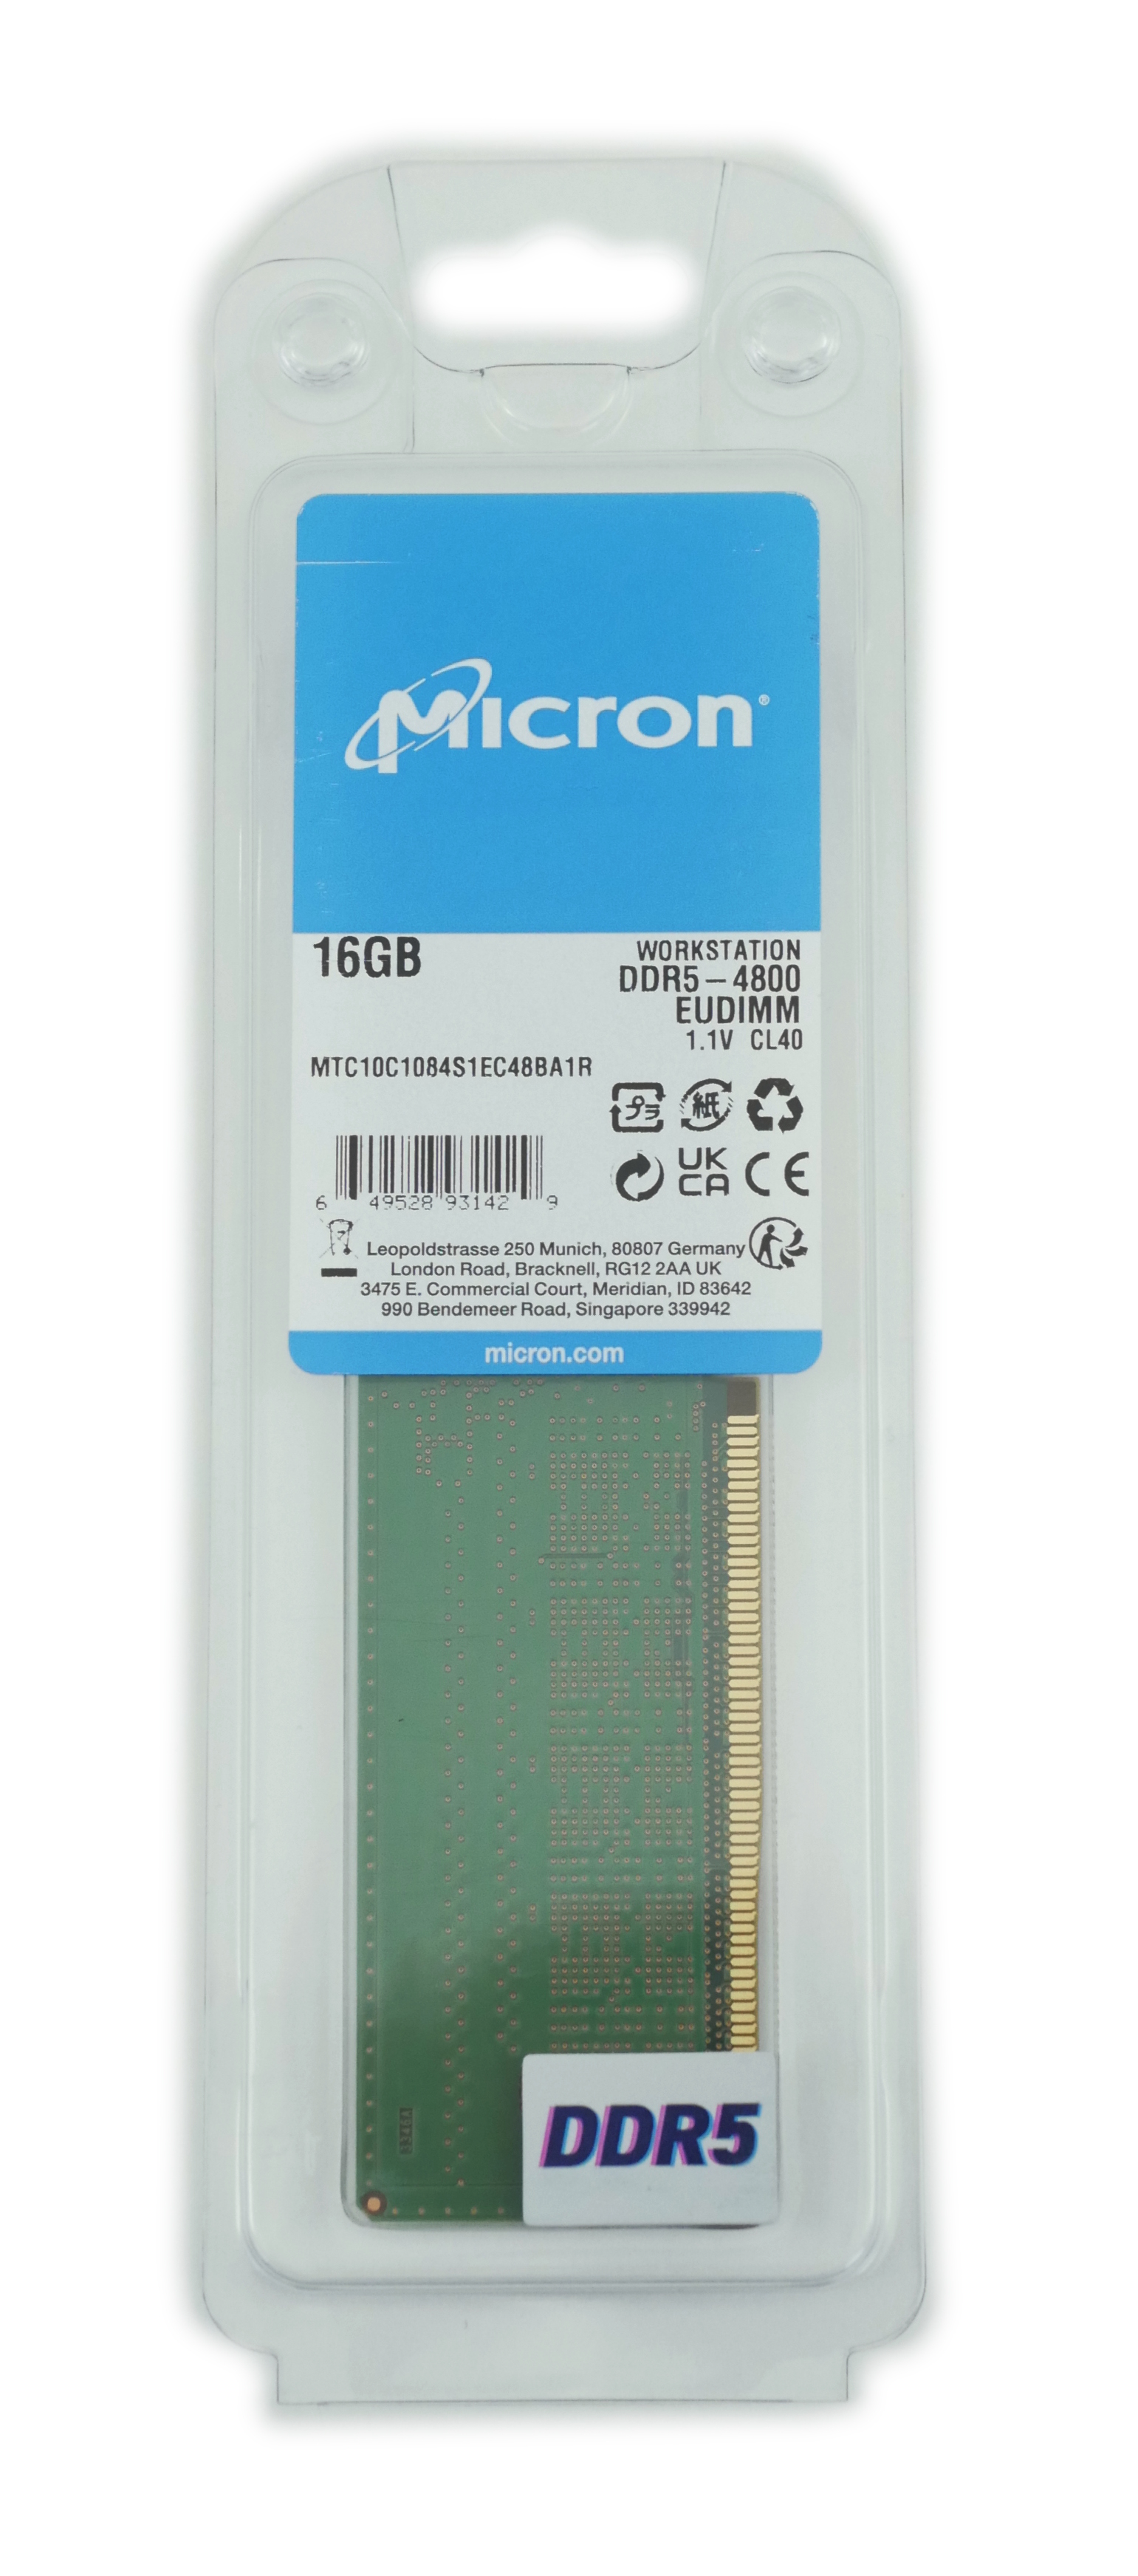 Micron 16GB MTC10C1084S1EC48BA1 PC5-4800B DDR5 288pin EuDIMM Unbuff - Click Image to Close